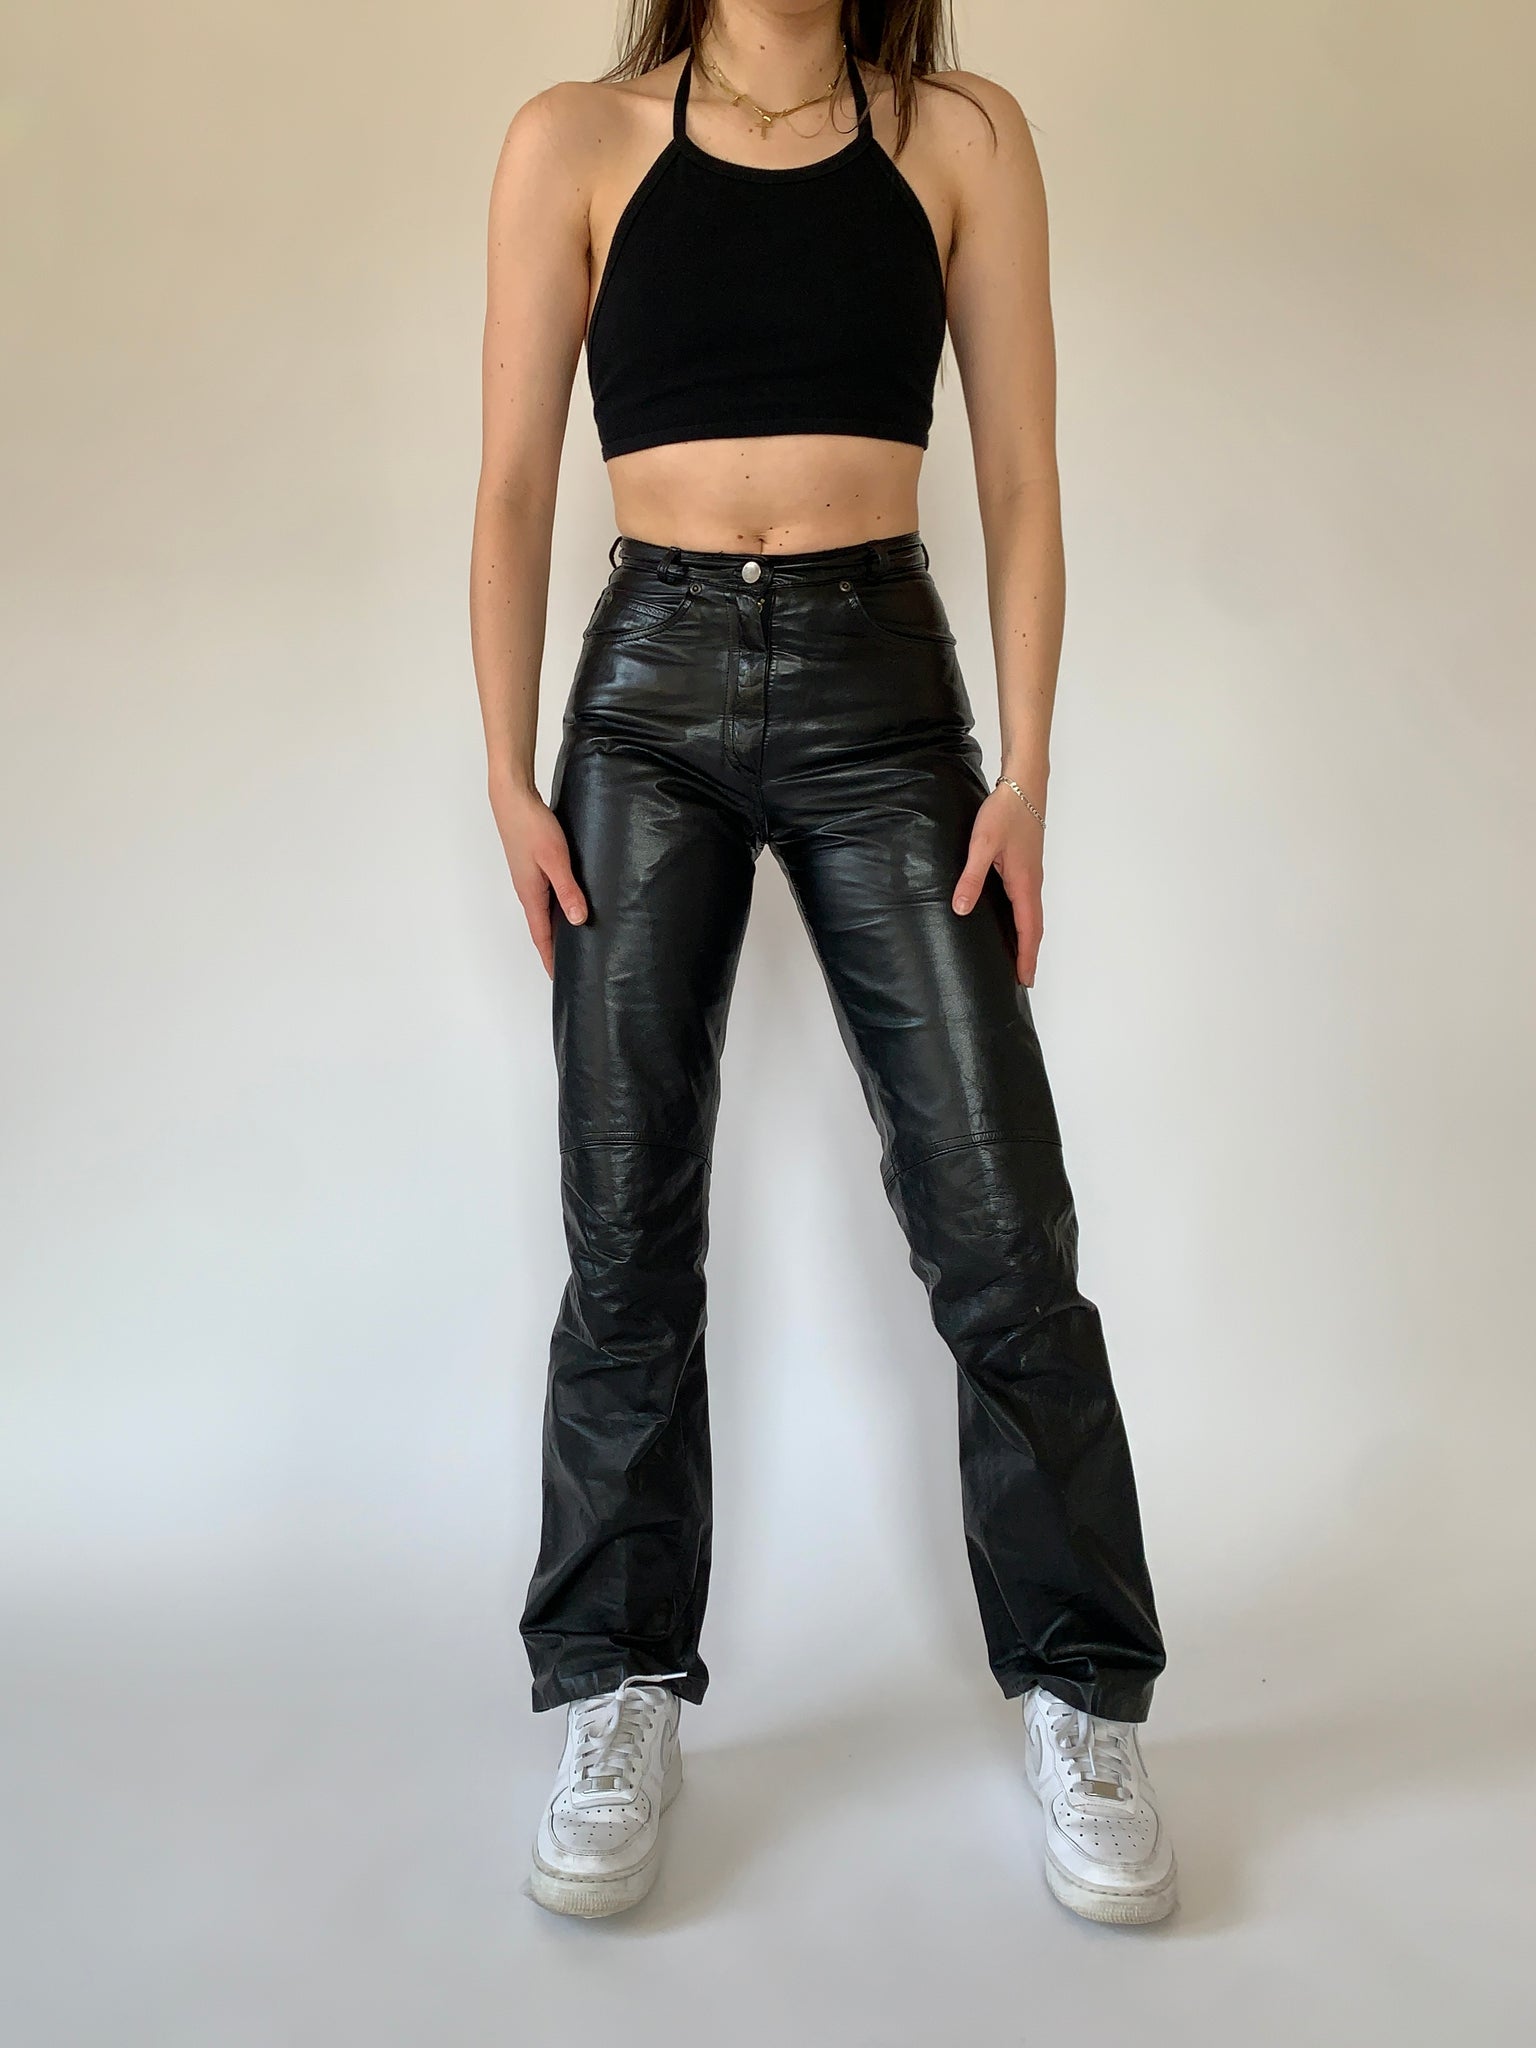 Vintage 1980s Leather Pants